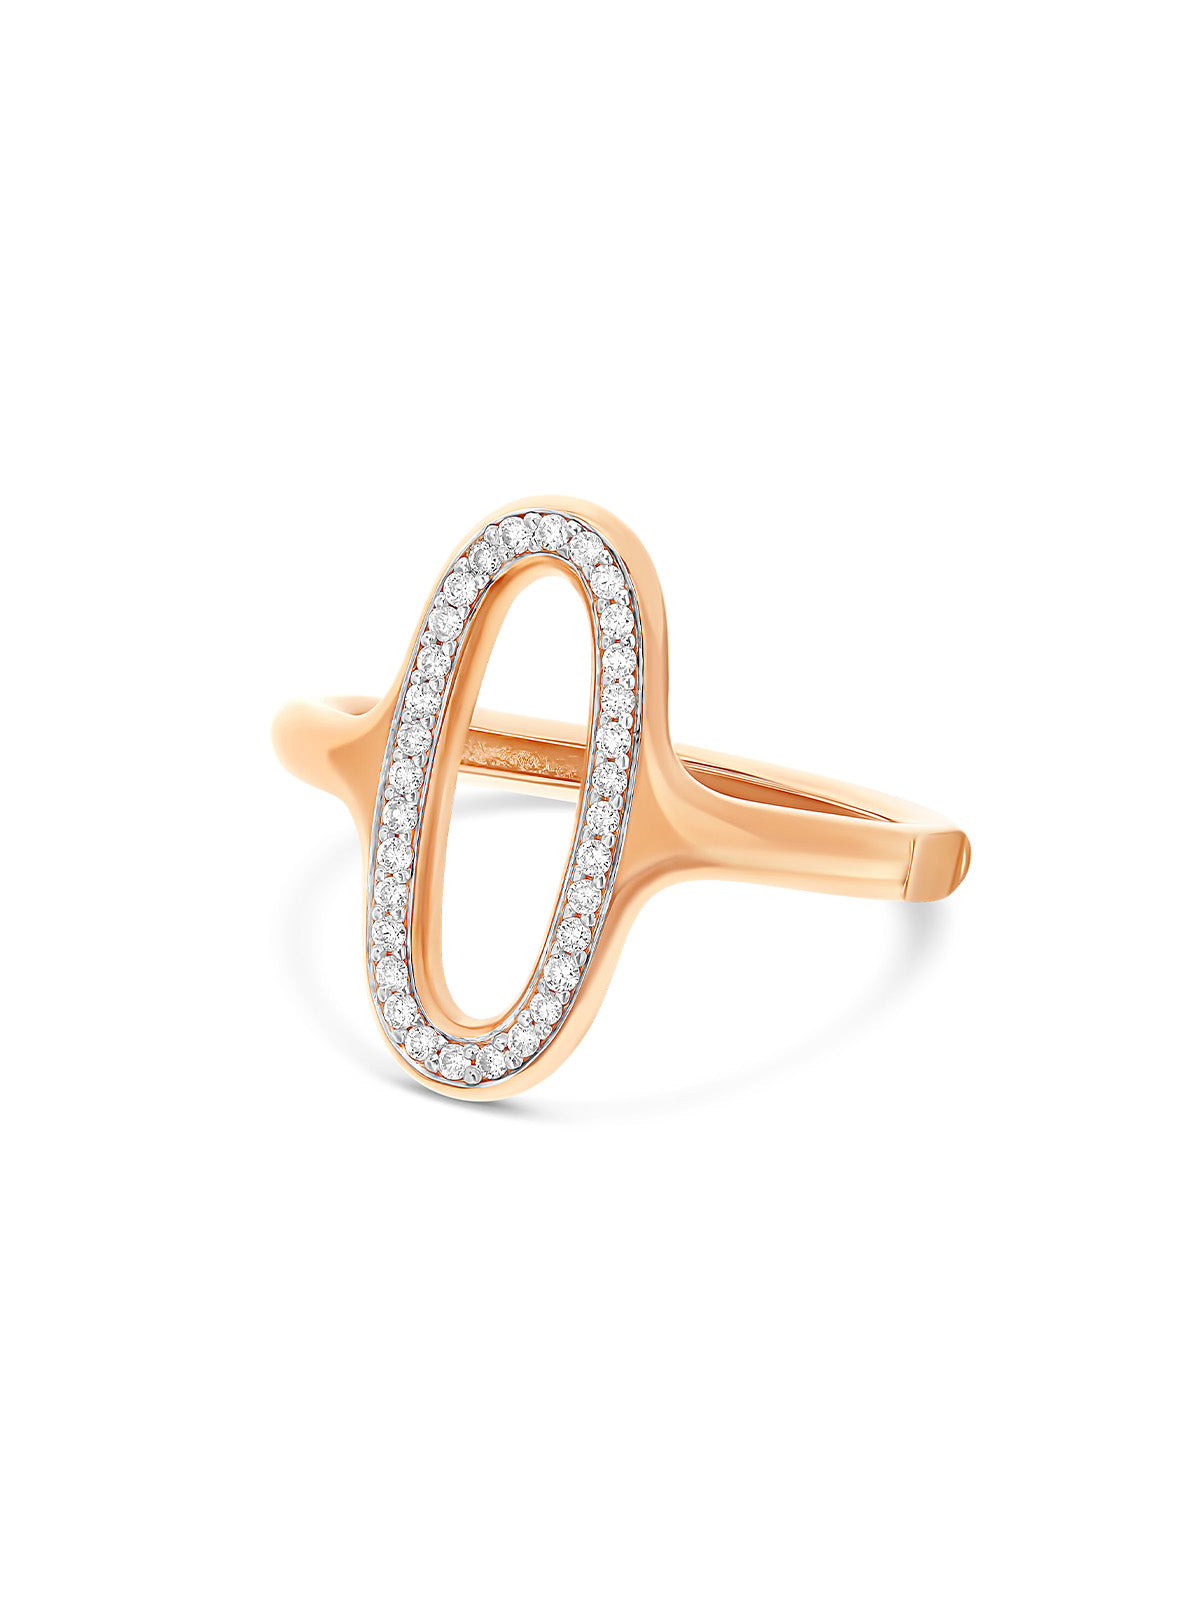 "Libera" rose gold and diamonds oval signet ring